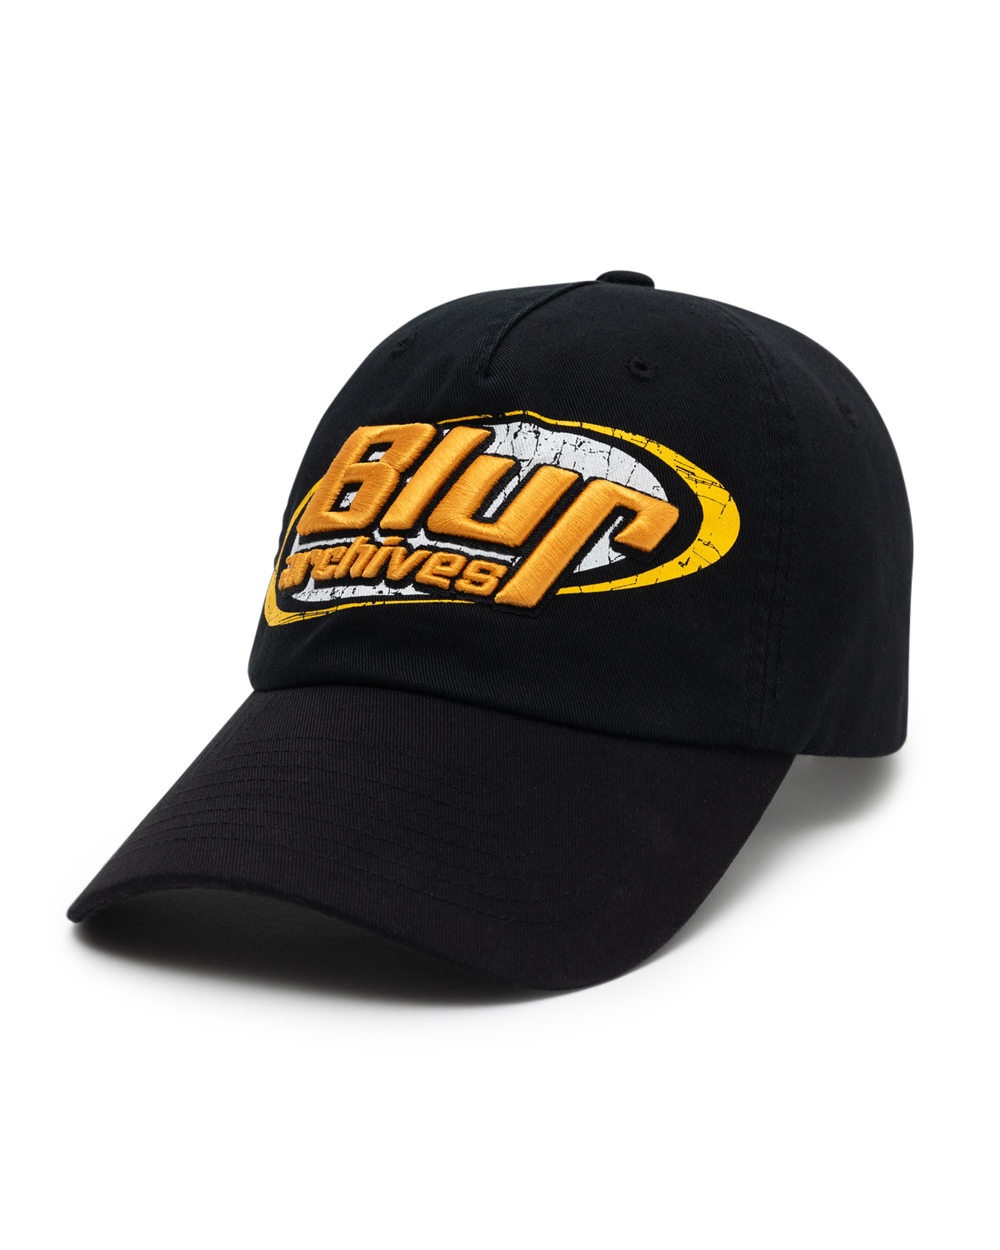 RETRO BLUR BALL CAP